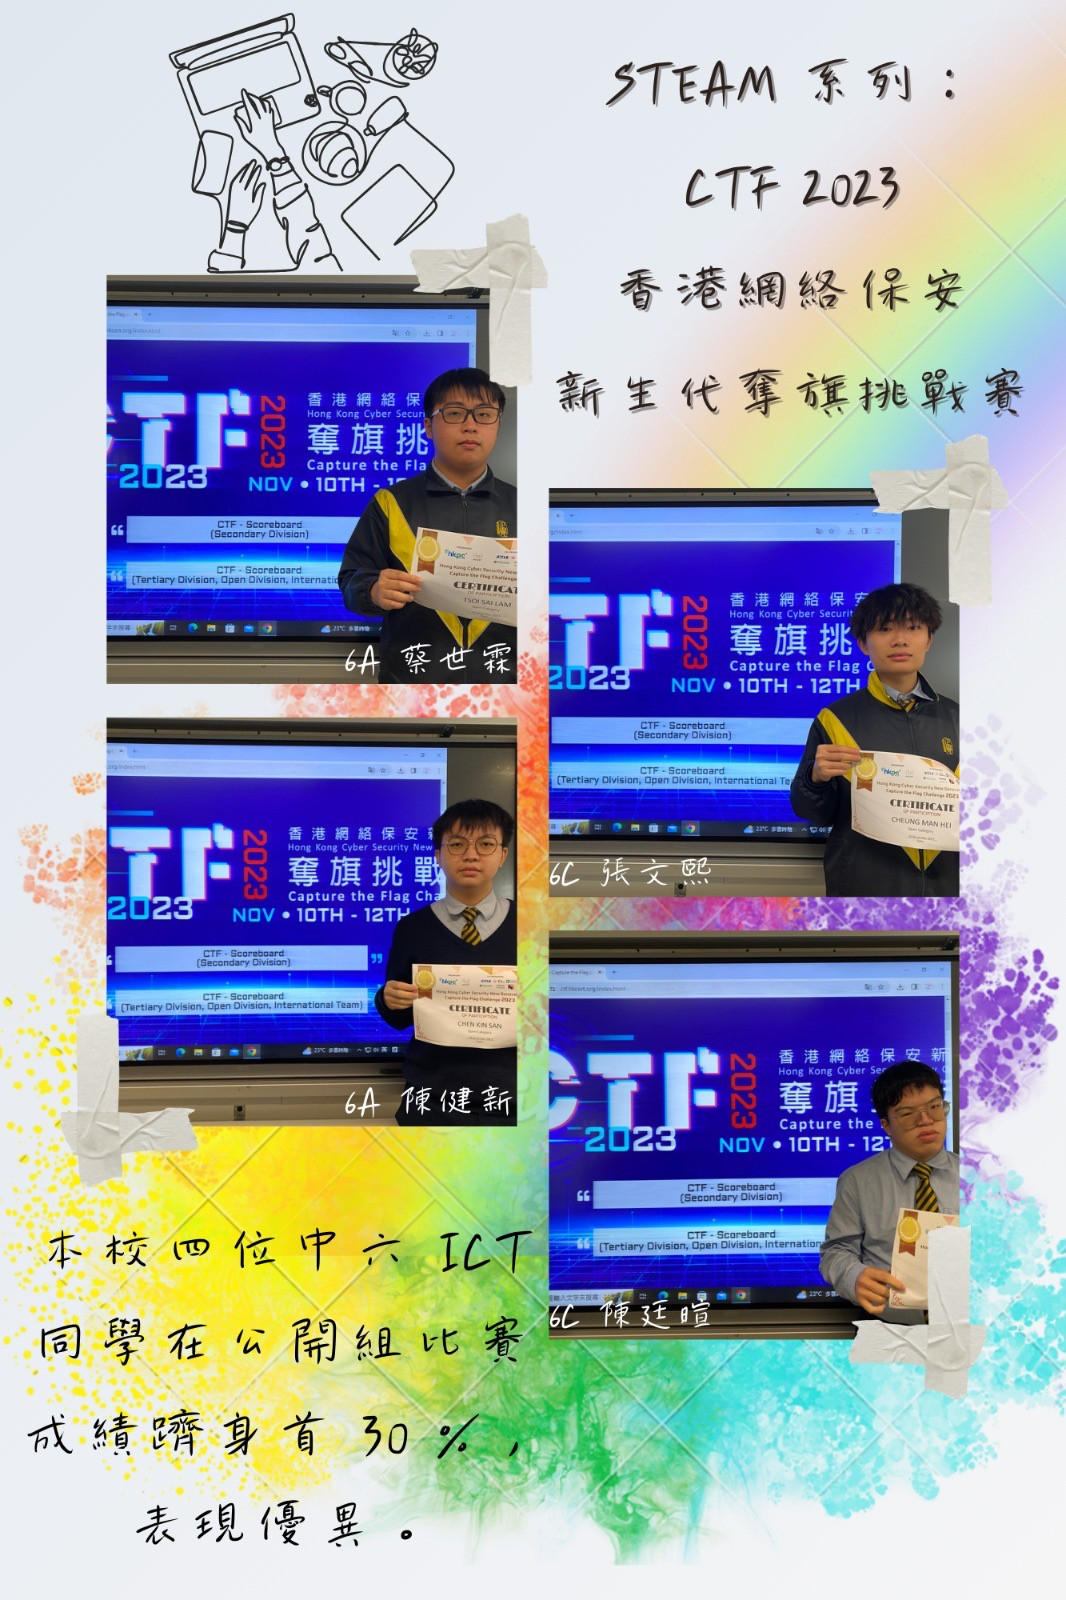 STEAM系列 ： CTF 2023 香港網絡保安新生代奪旗挑戰賽